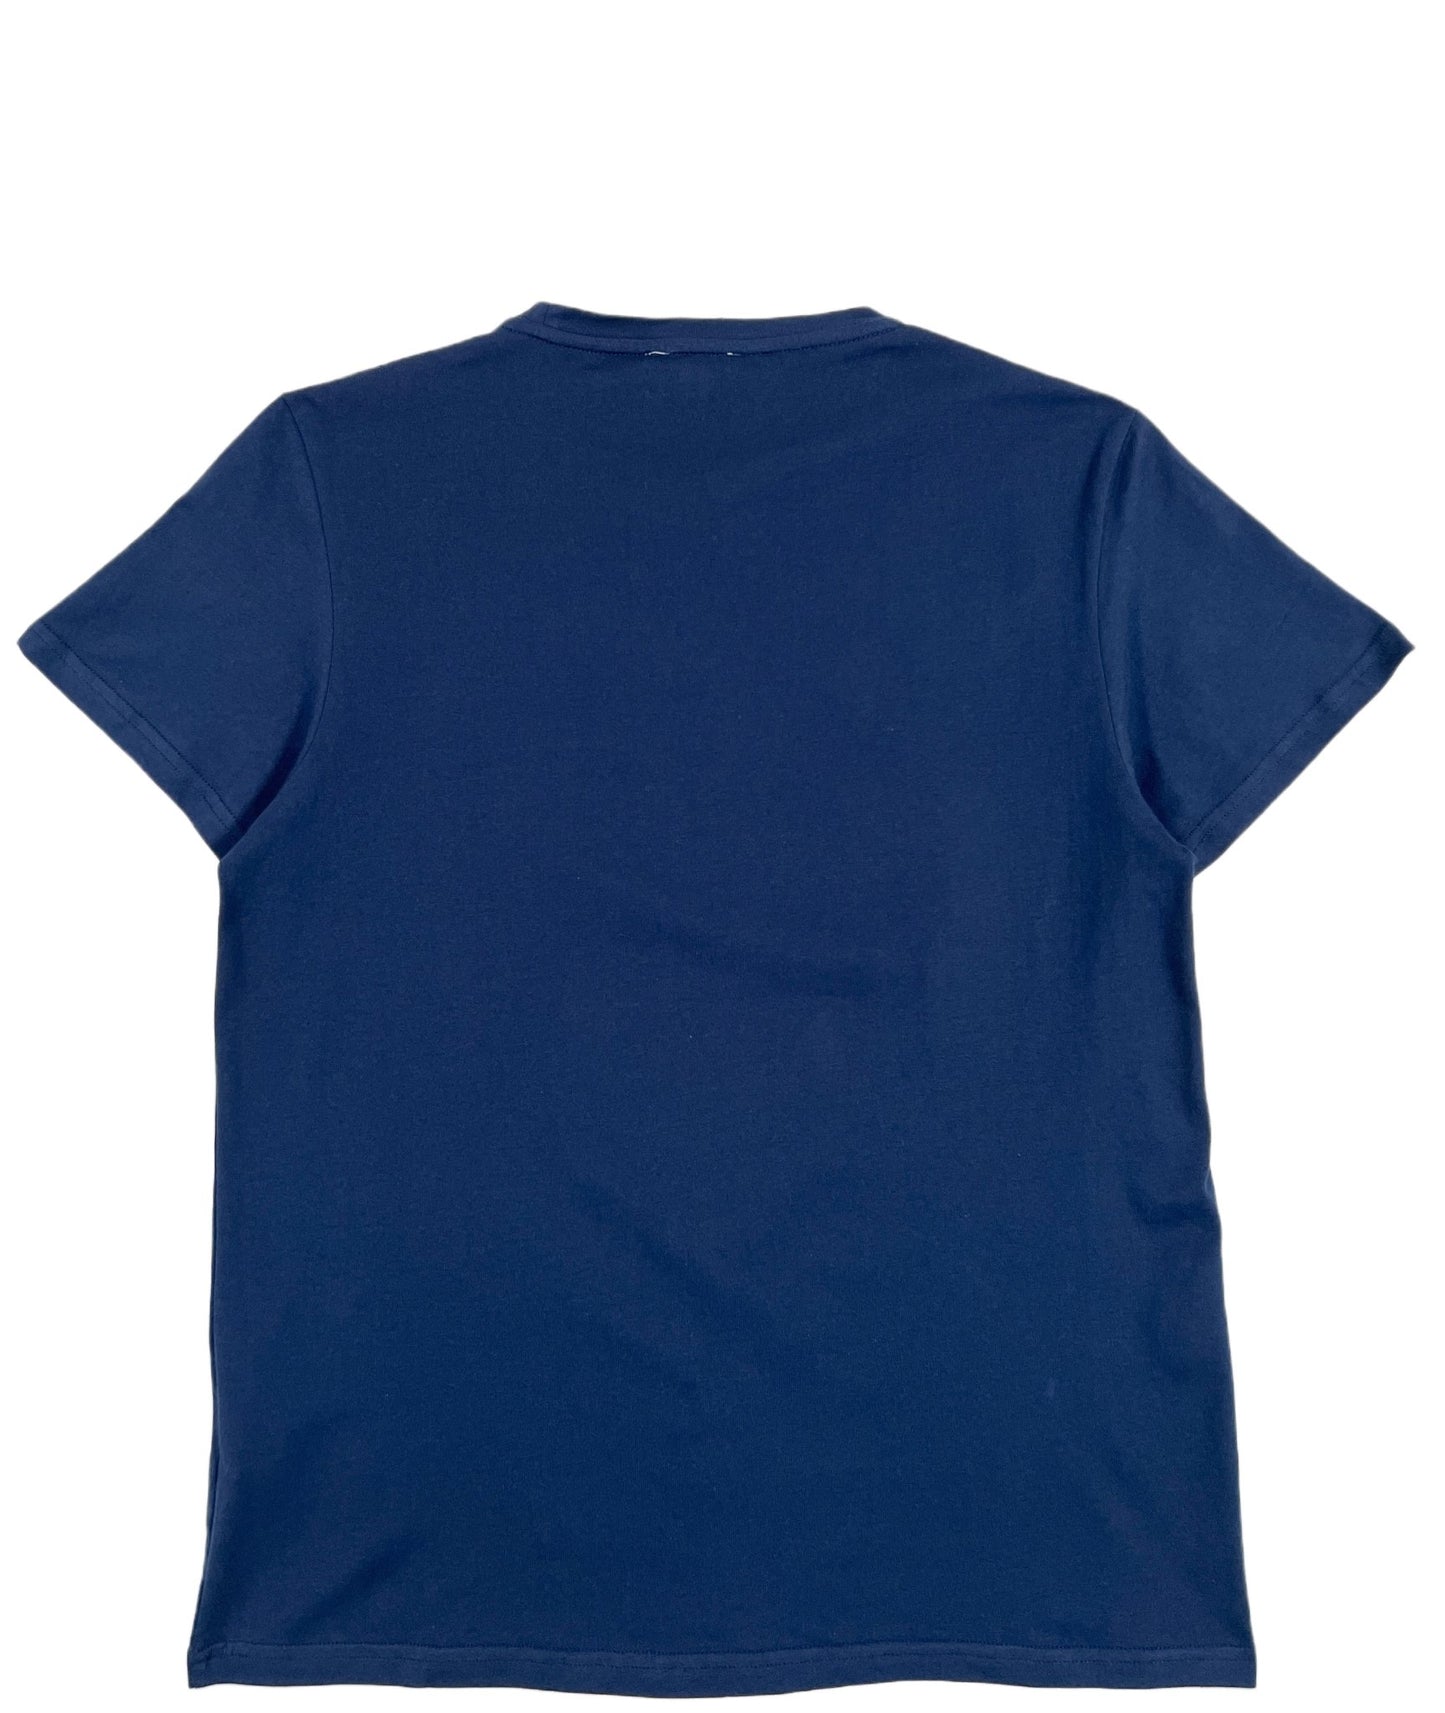 Aubie Fishing T-Shirt XXXL / Ice Blue / CC Short Sleeve (Pocket)